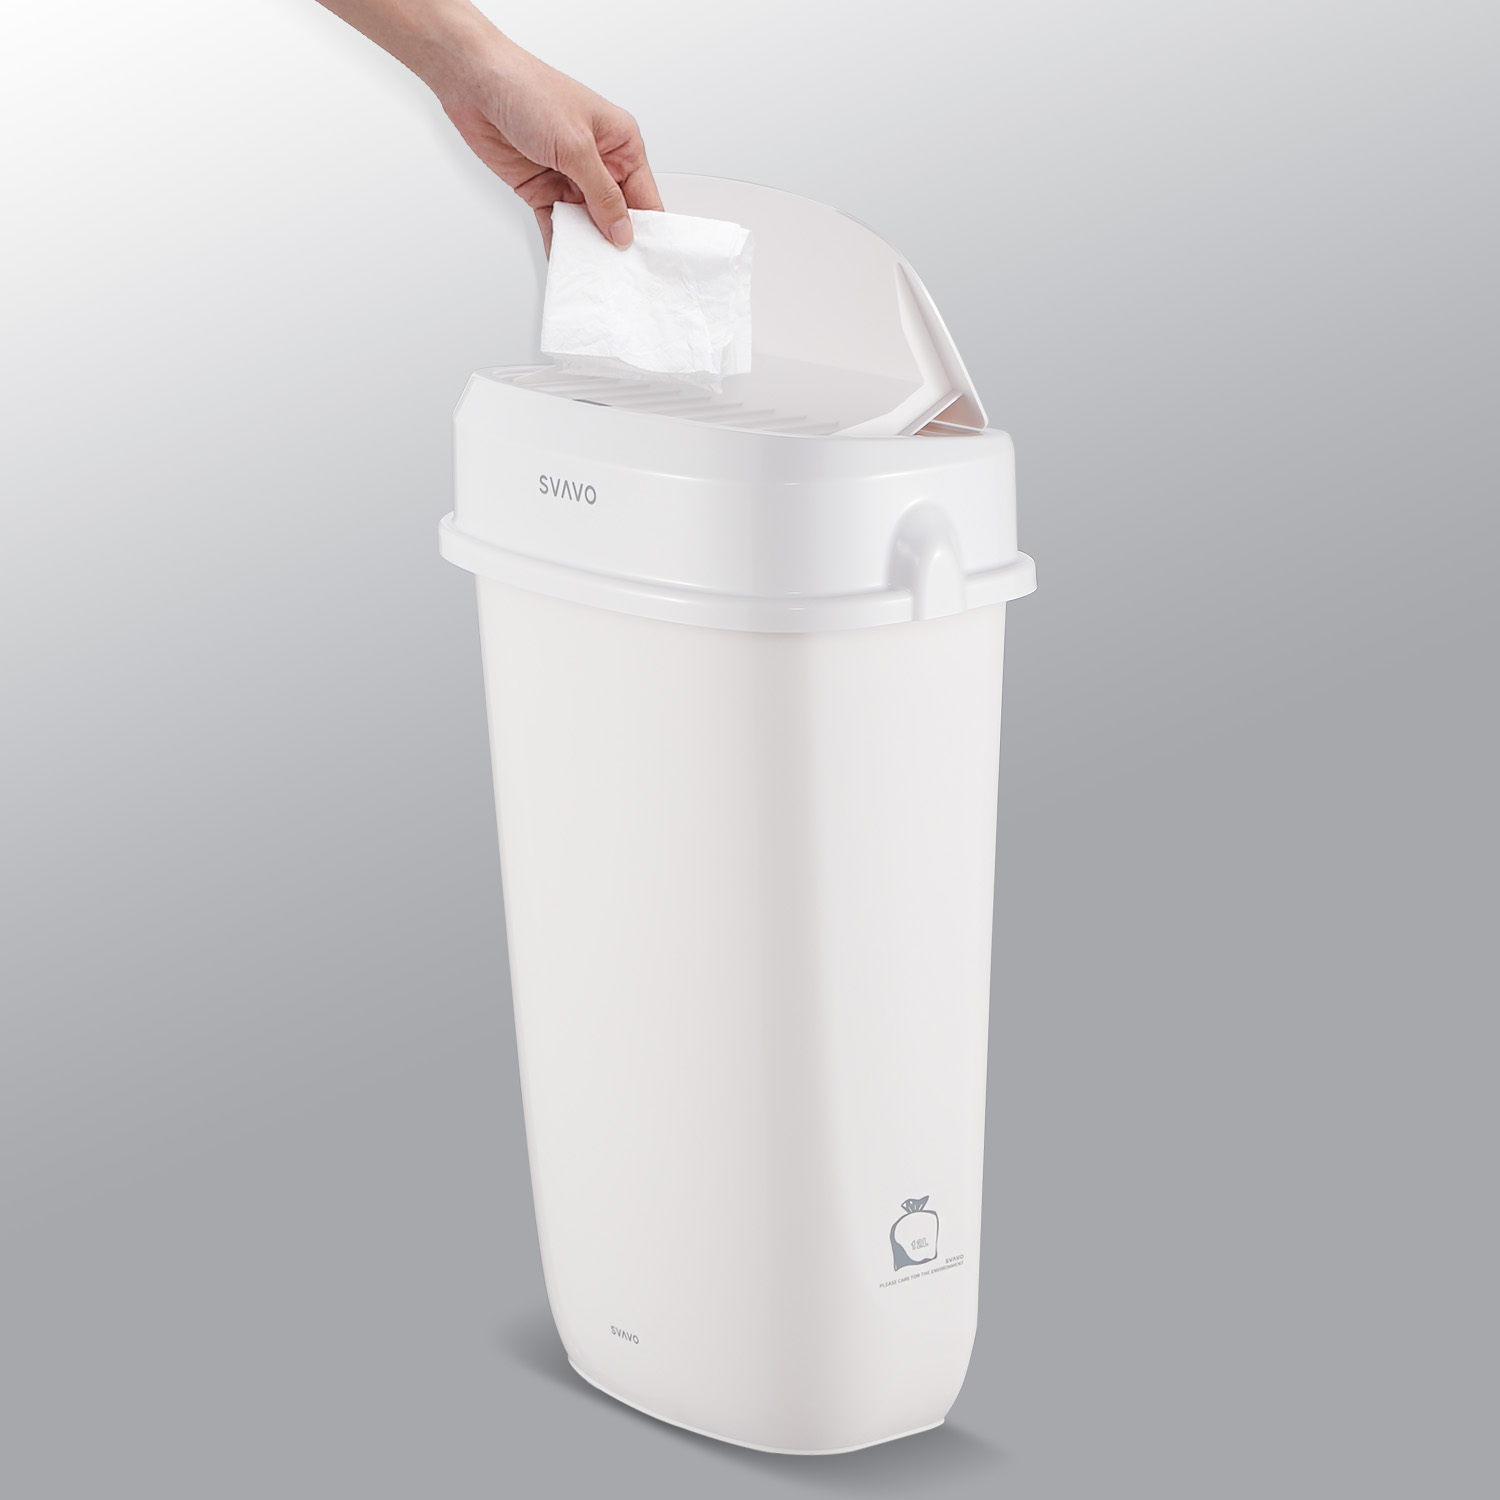 Wall Mounted / Floor Stand Automatic Sensor Feminine Sanitary Bin Trash Can PL-151041S